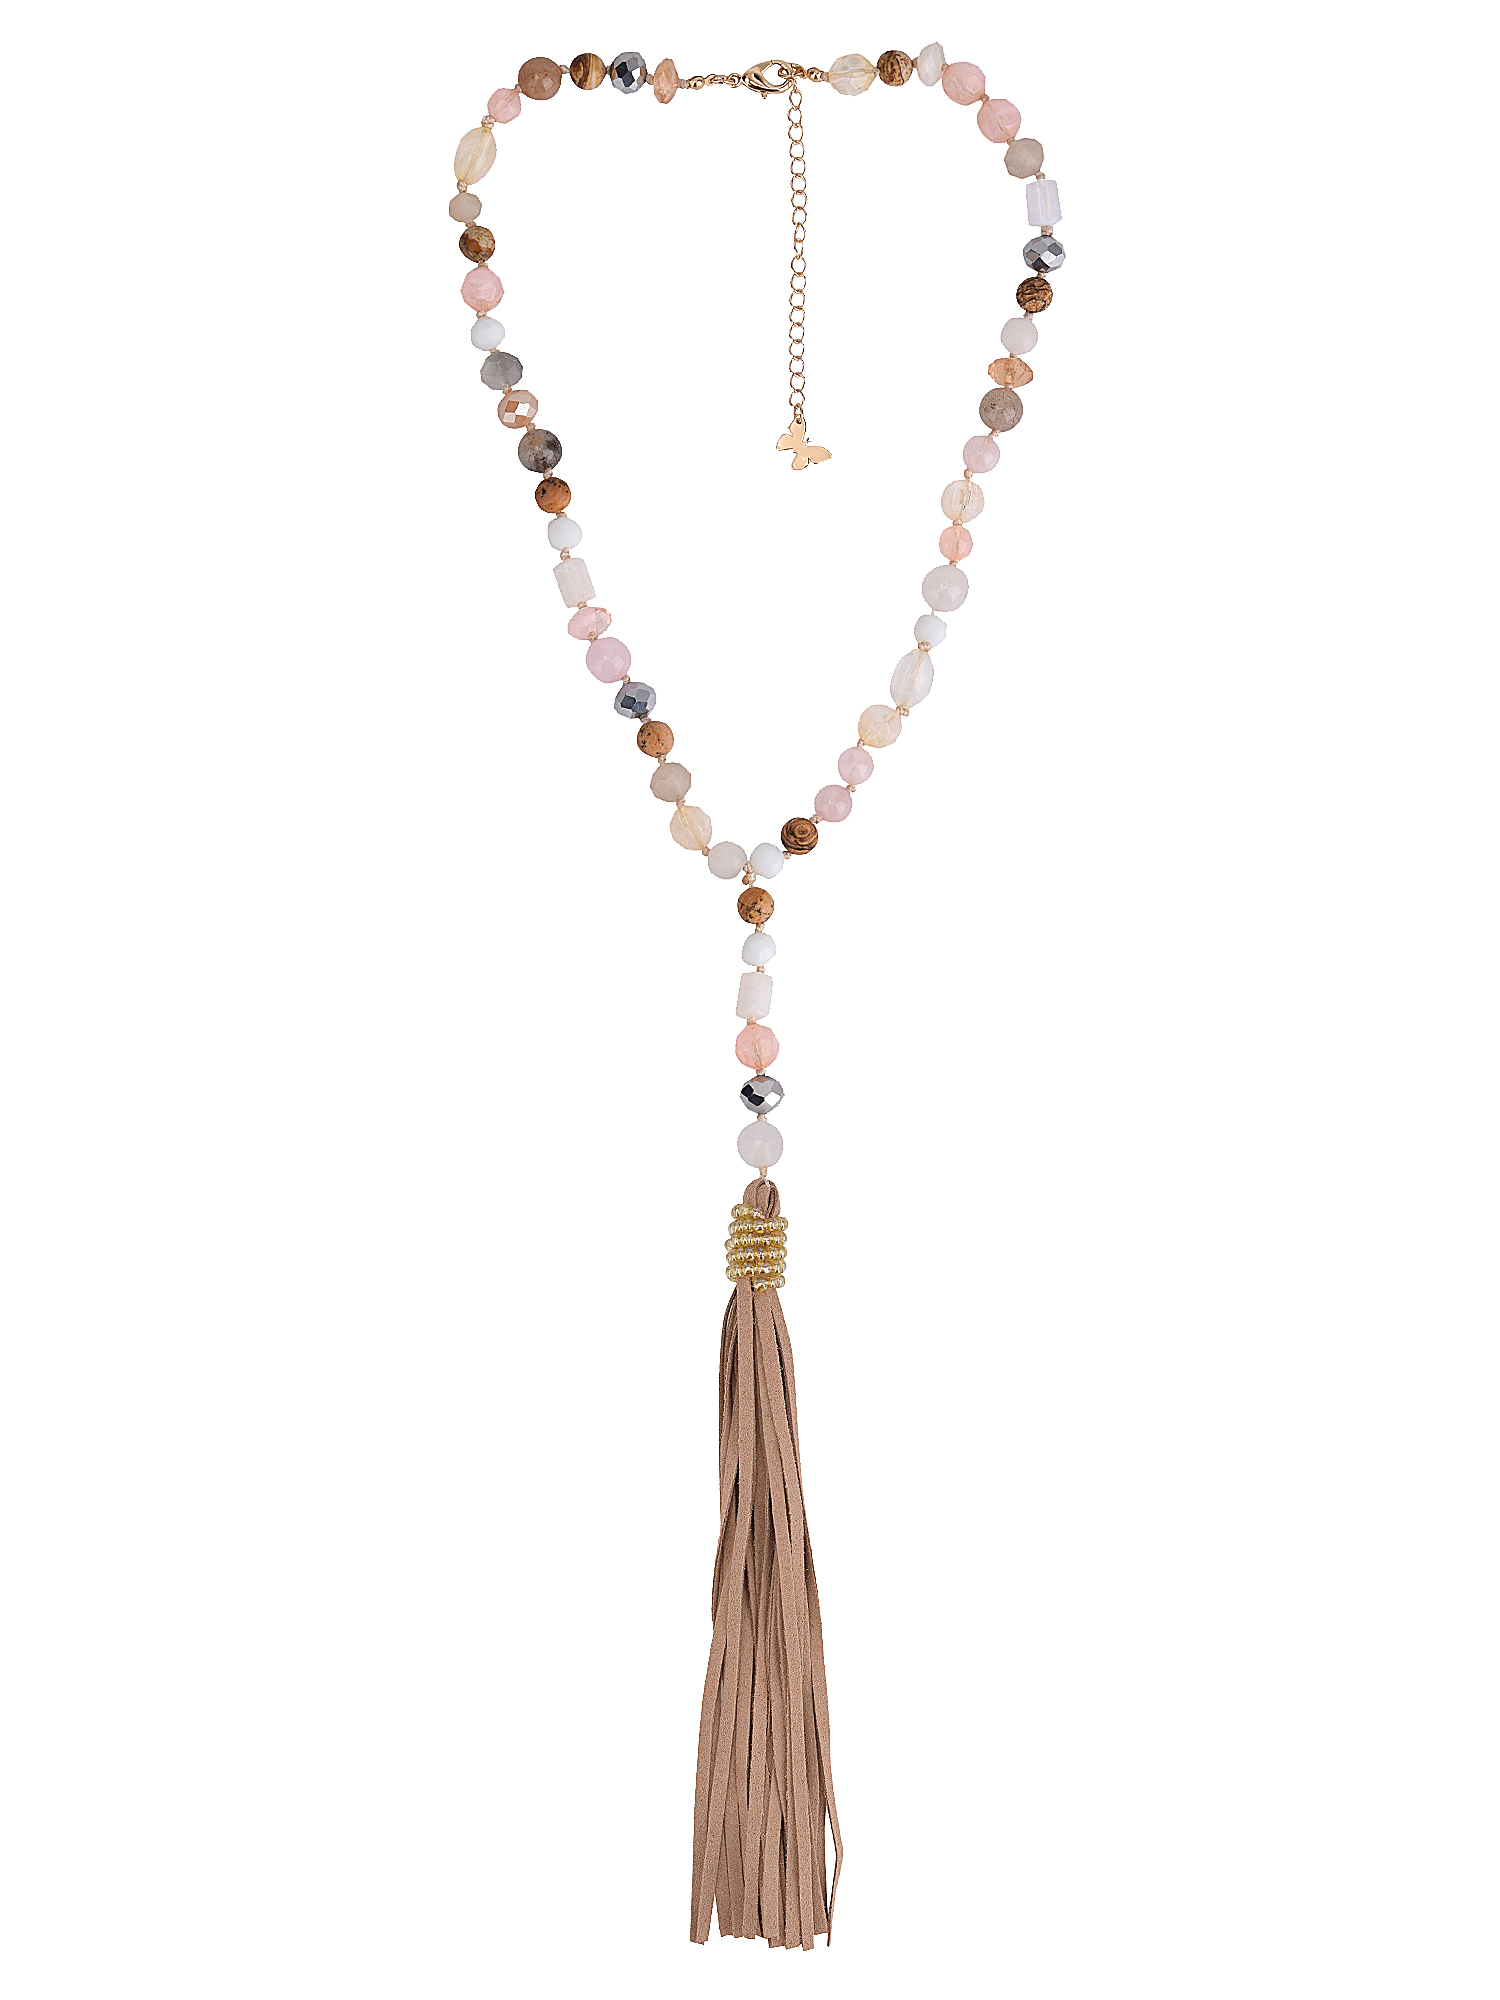 The Pioneer Woman - Women's Jewelry, Multi-Bead Tassel Y-Necklace - image 1 of 5